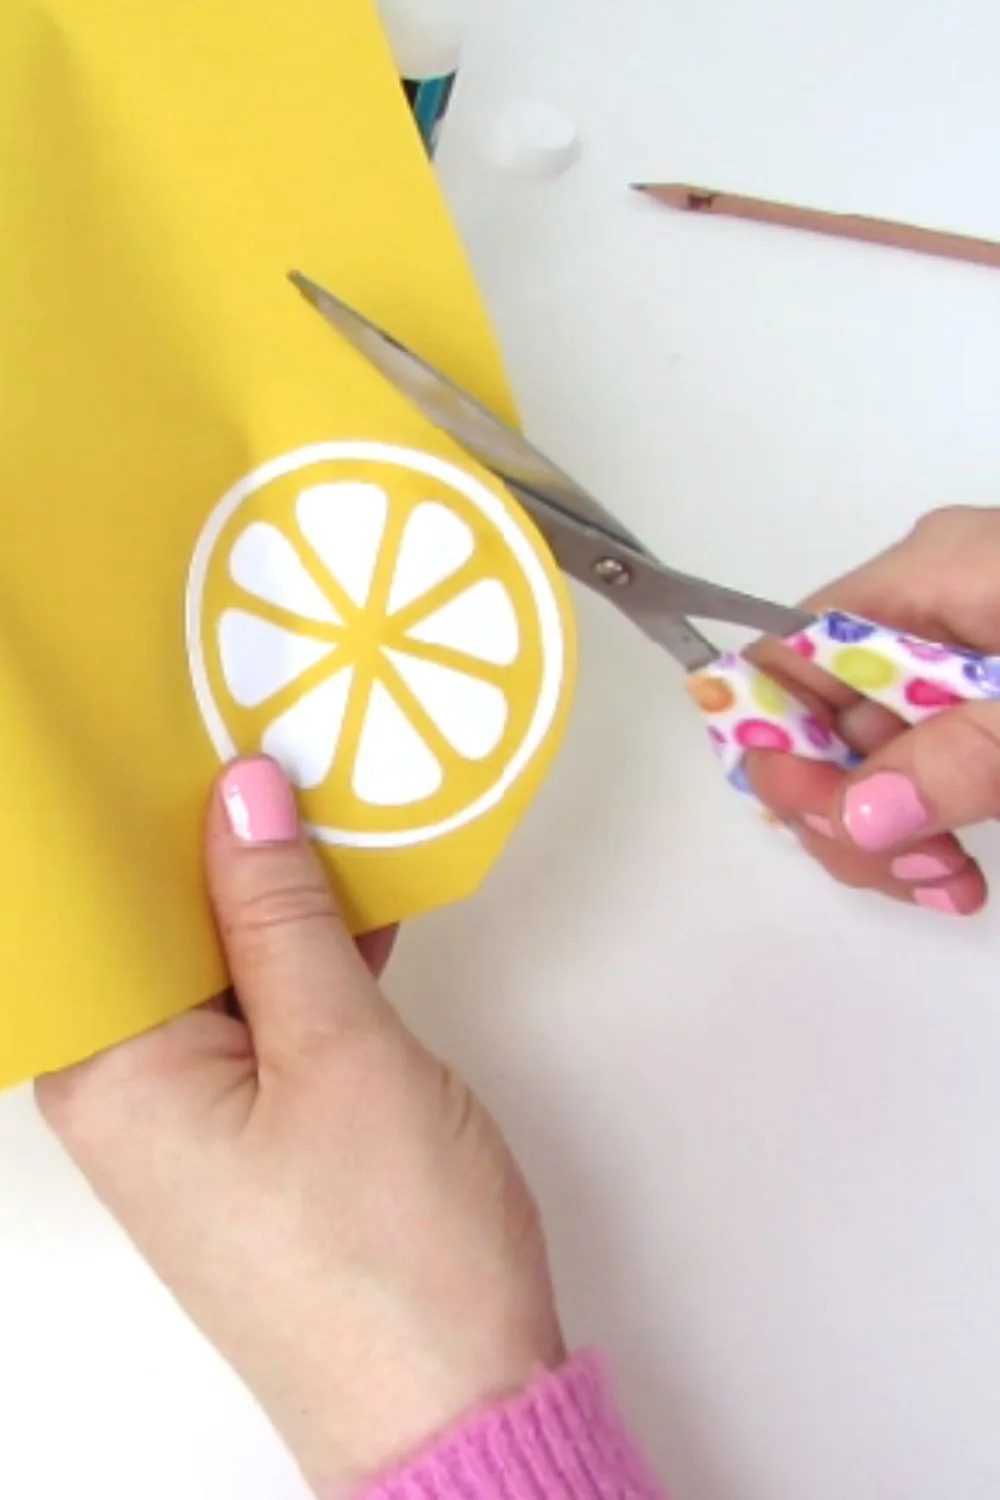 cut the paper to make the lemon slice